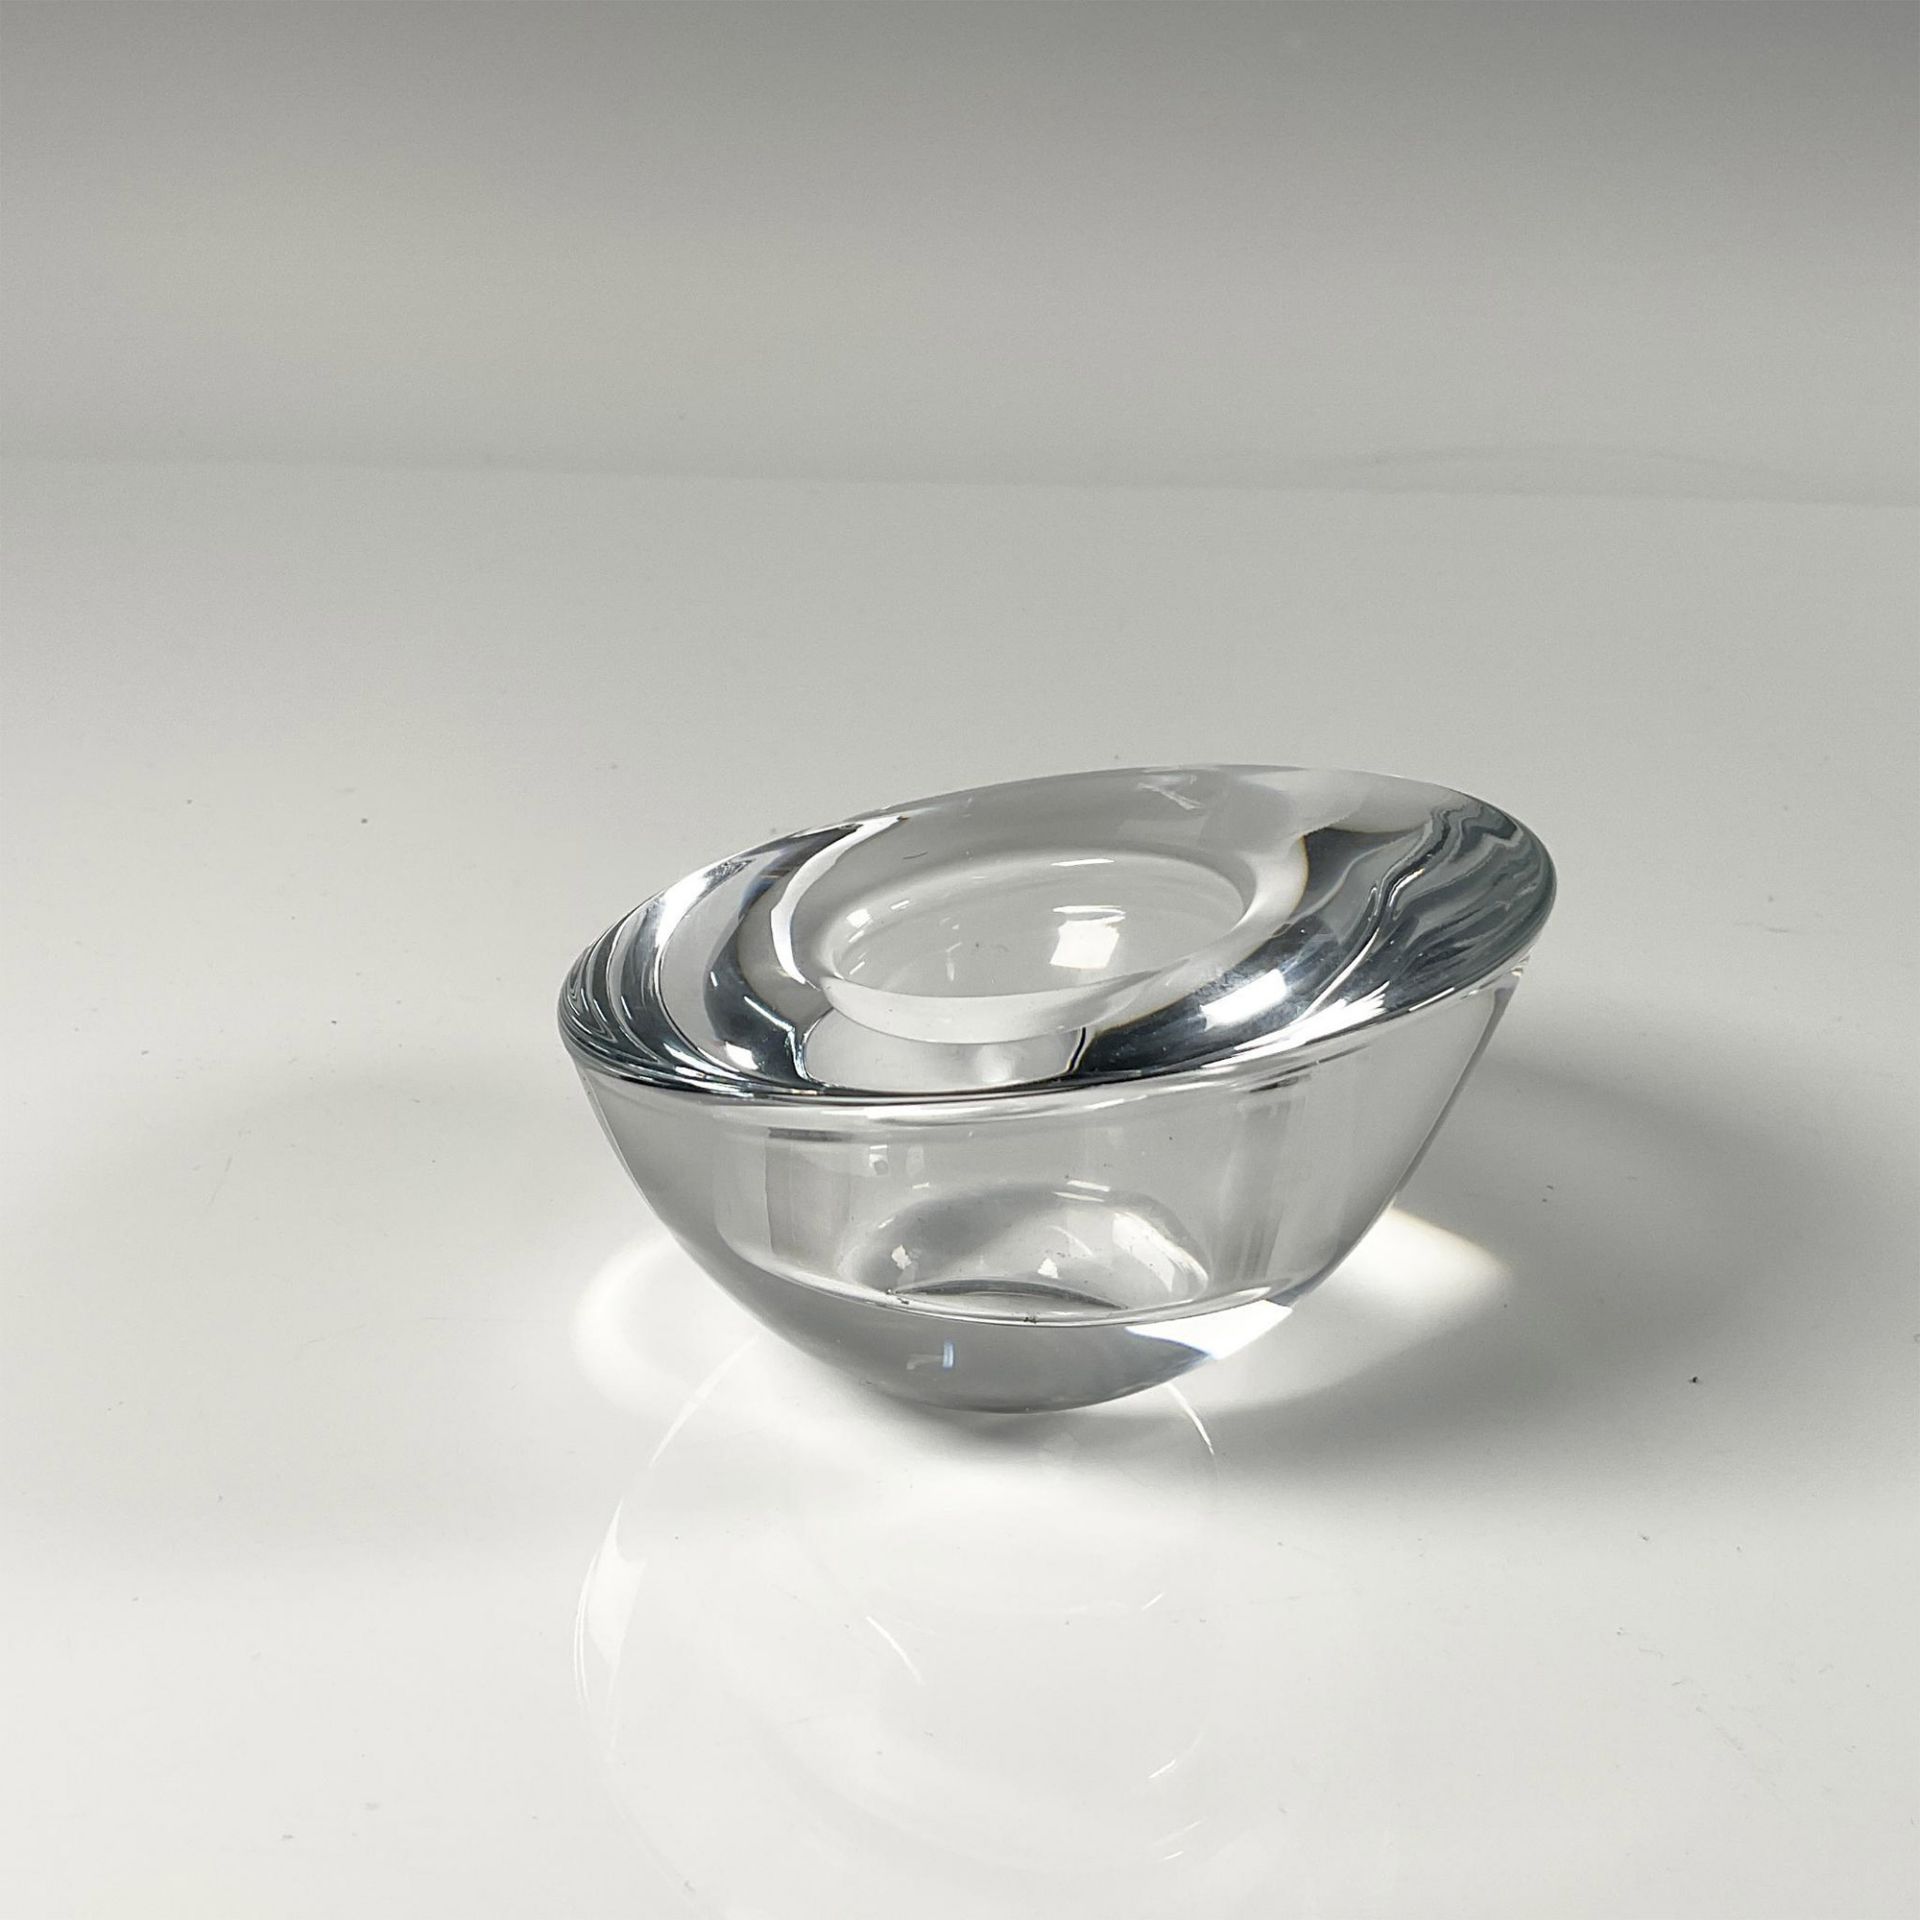 Orrefors Crystal Candleholder, Delight - Image 2 of 4